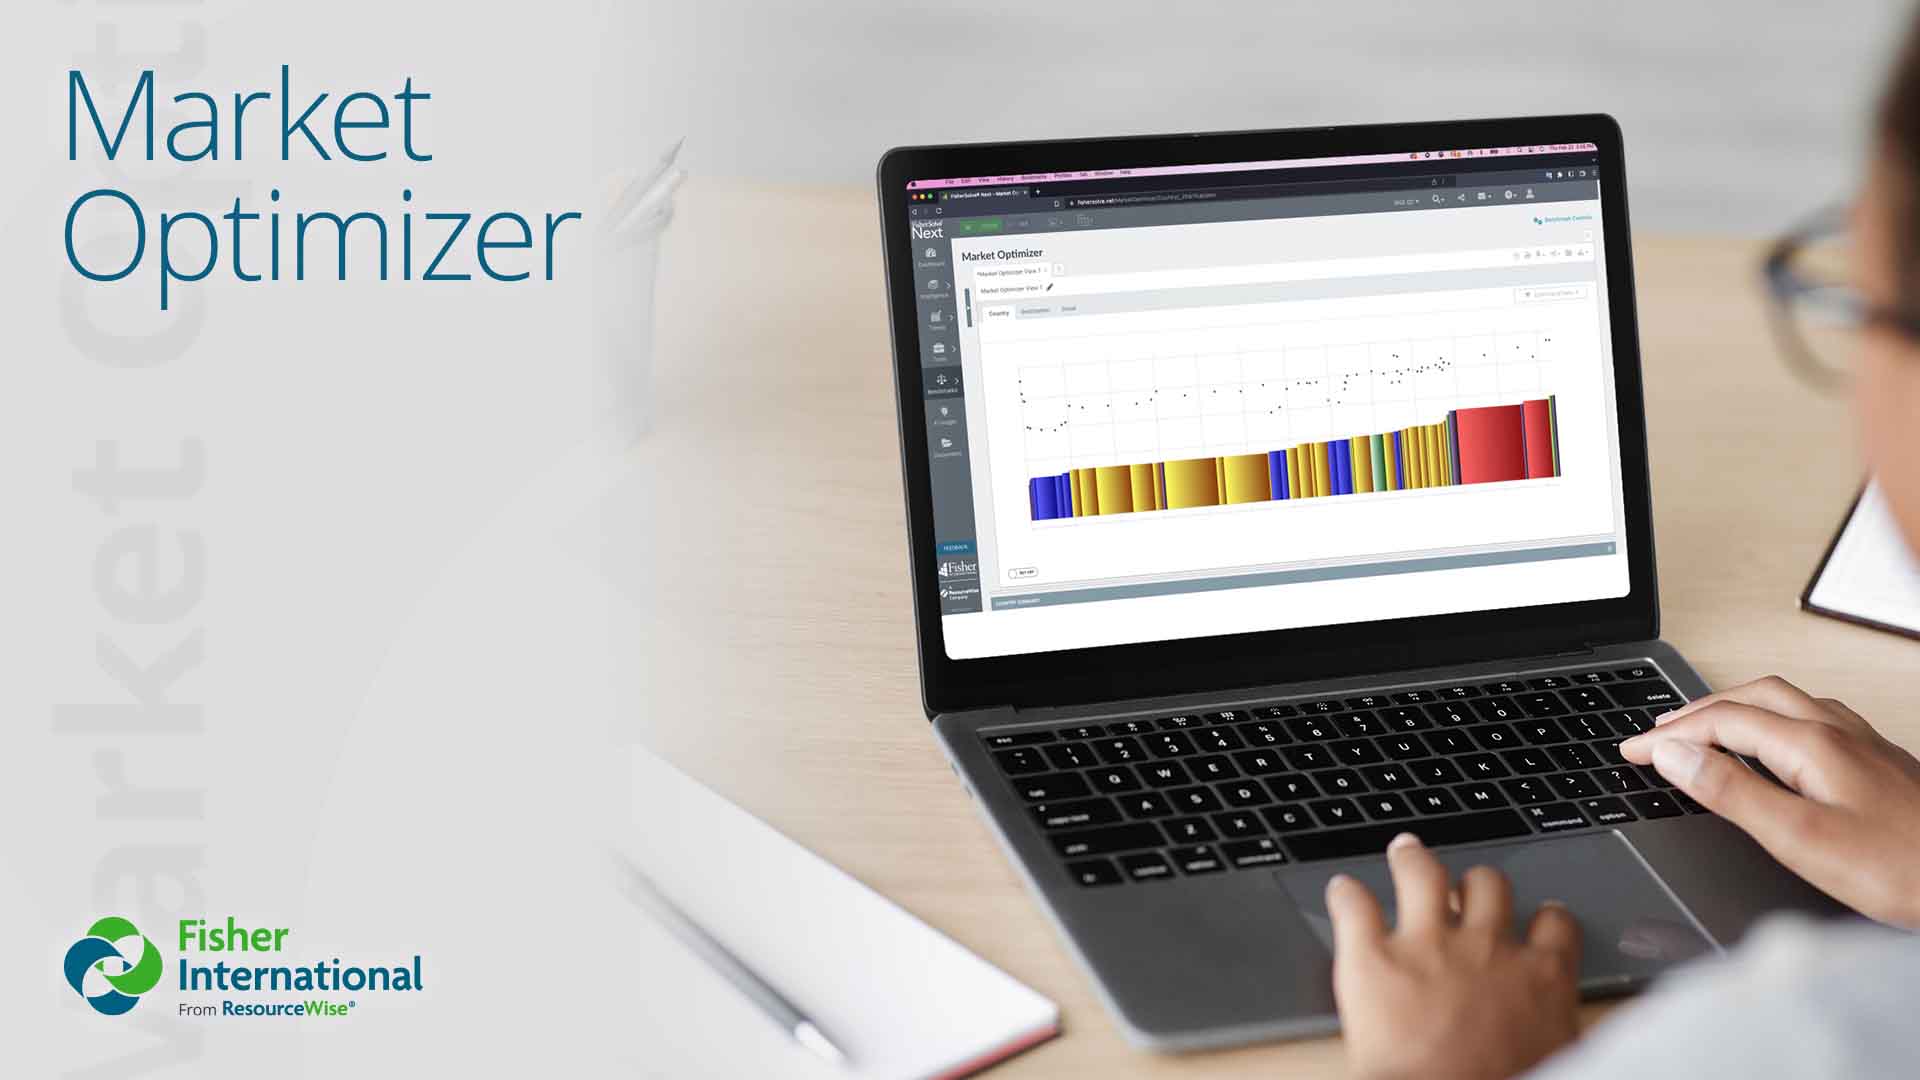 Market Optimizer dashboard shown on laptop.